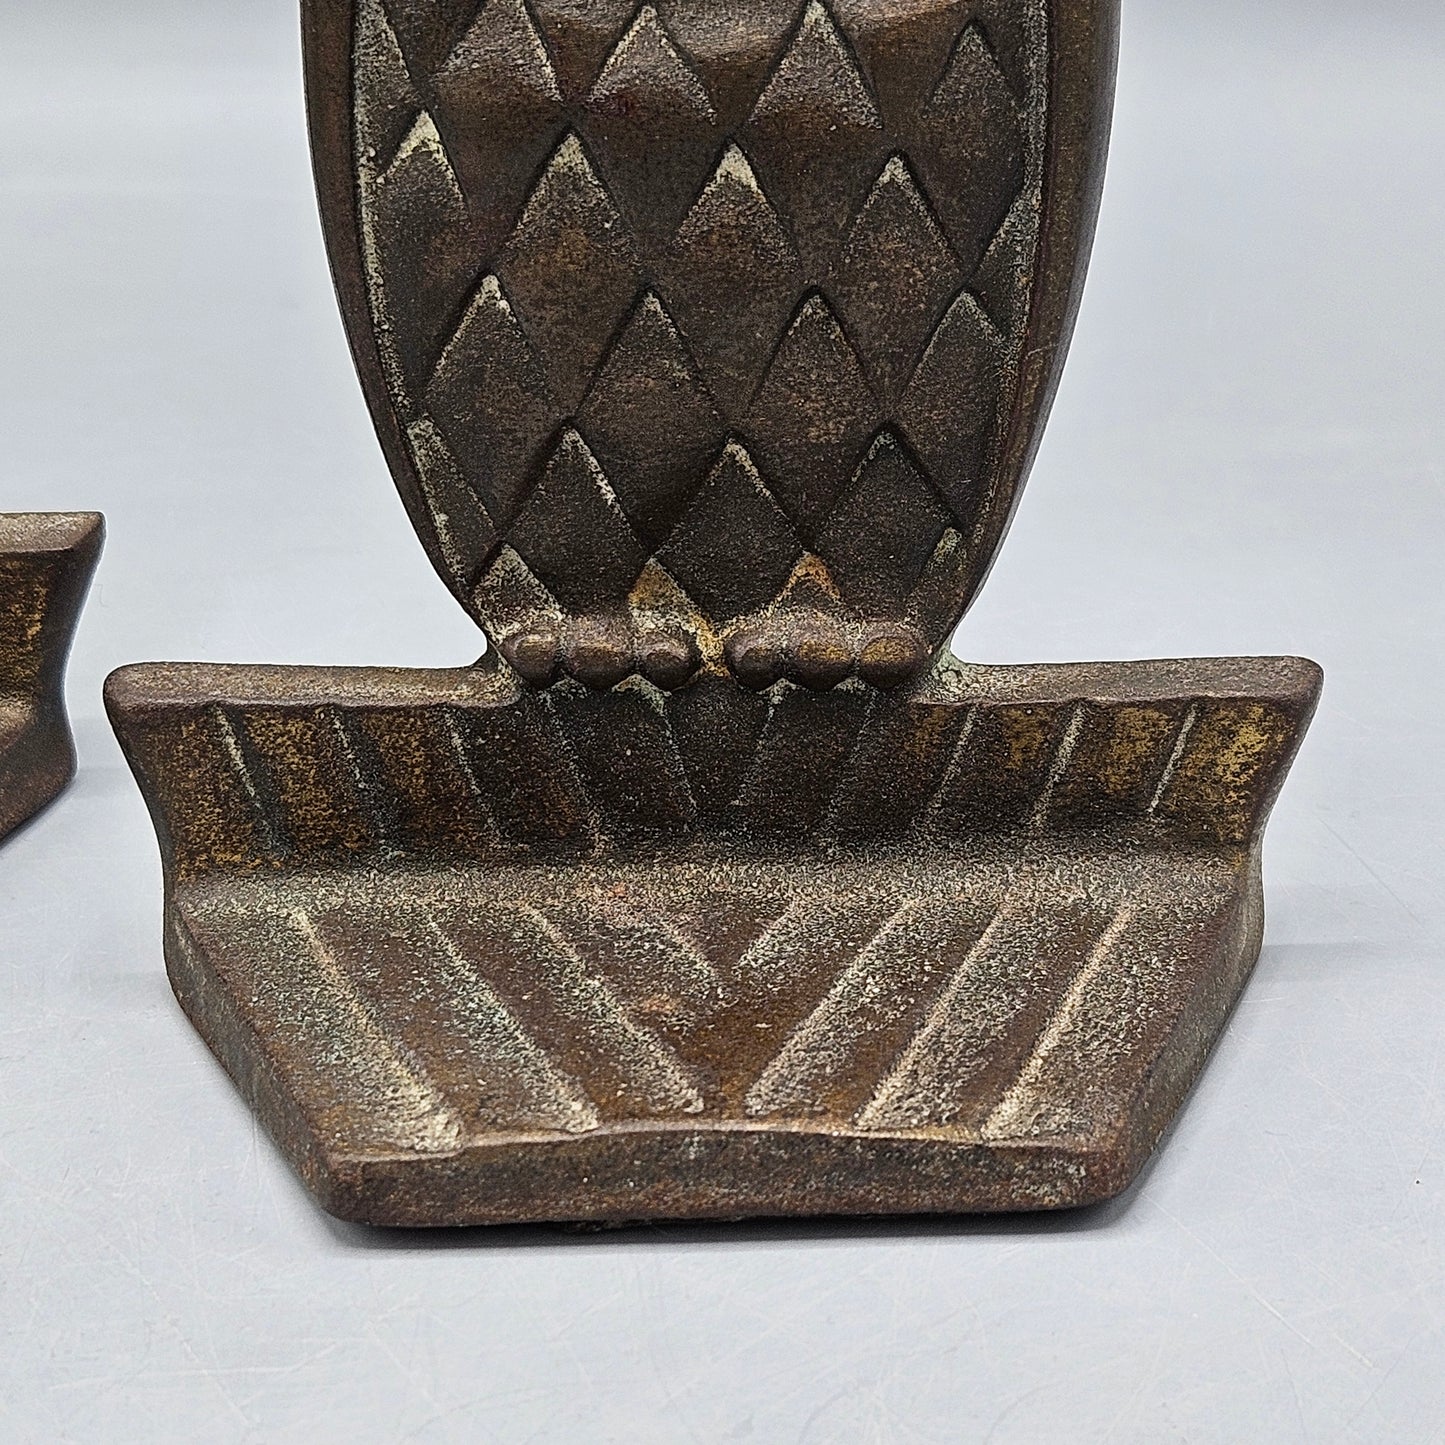 Vintage Bronze Owl Bookends